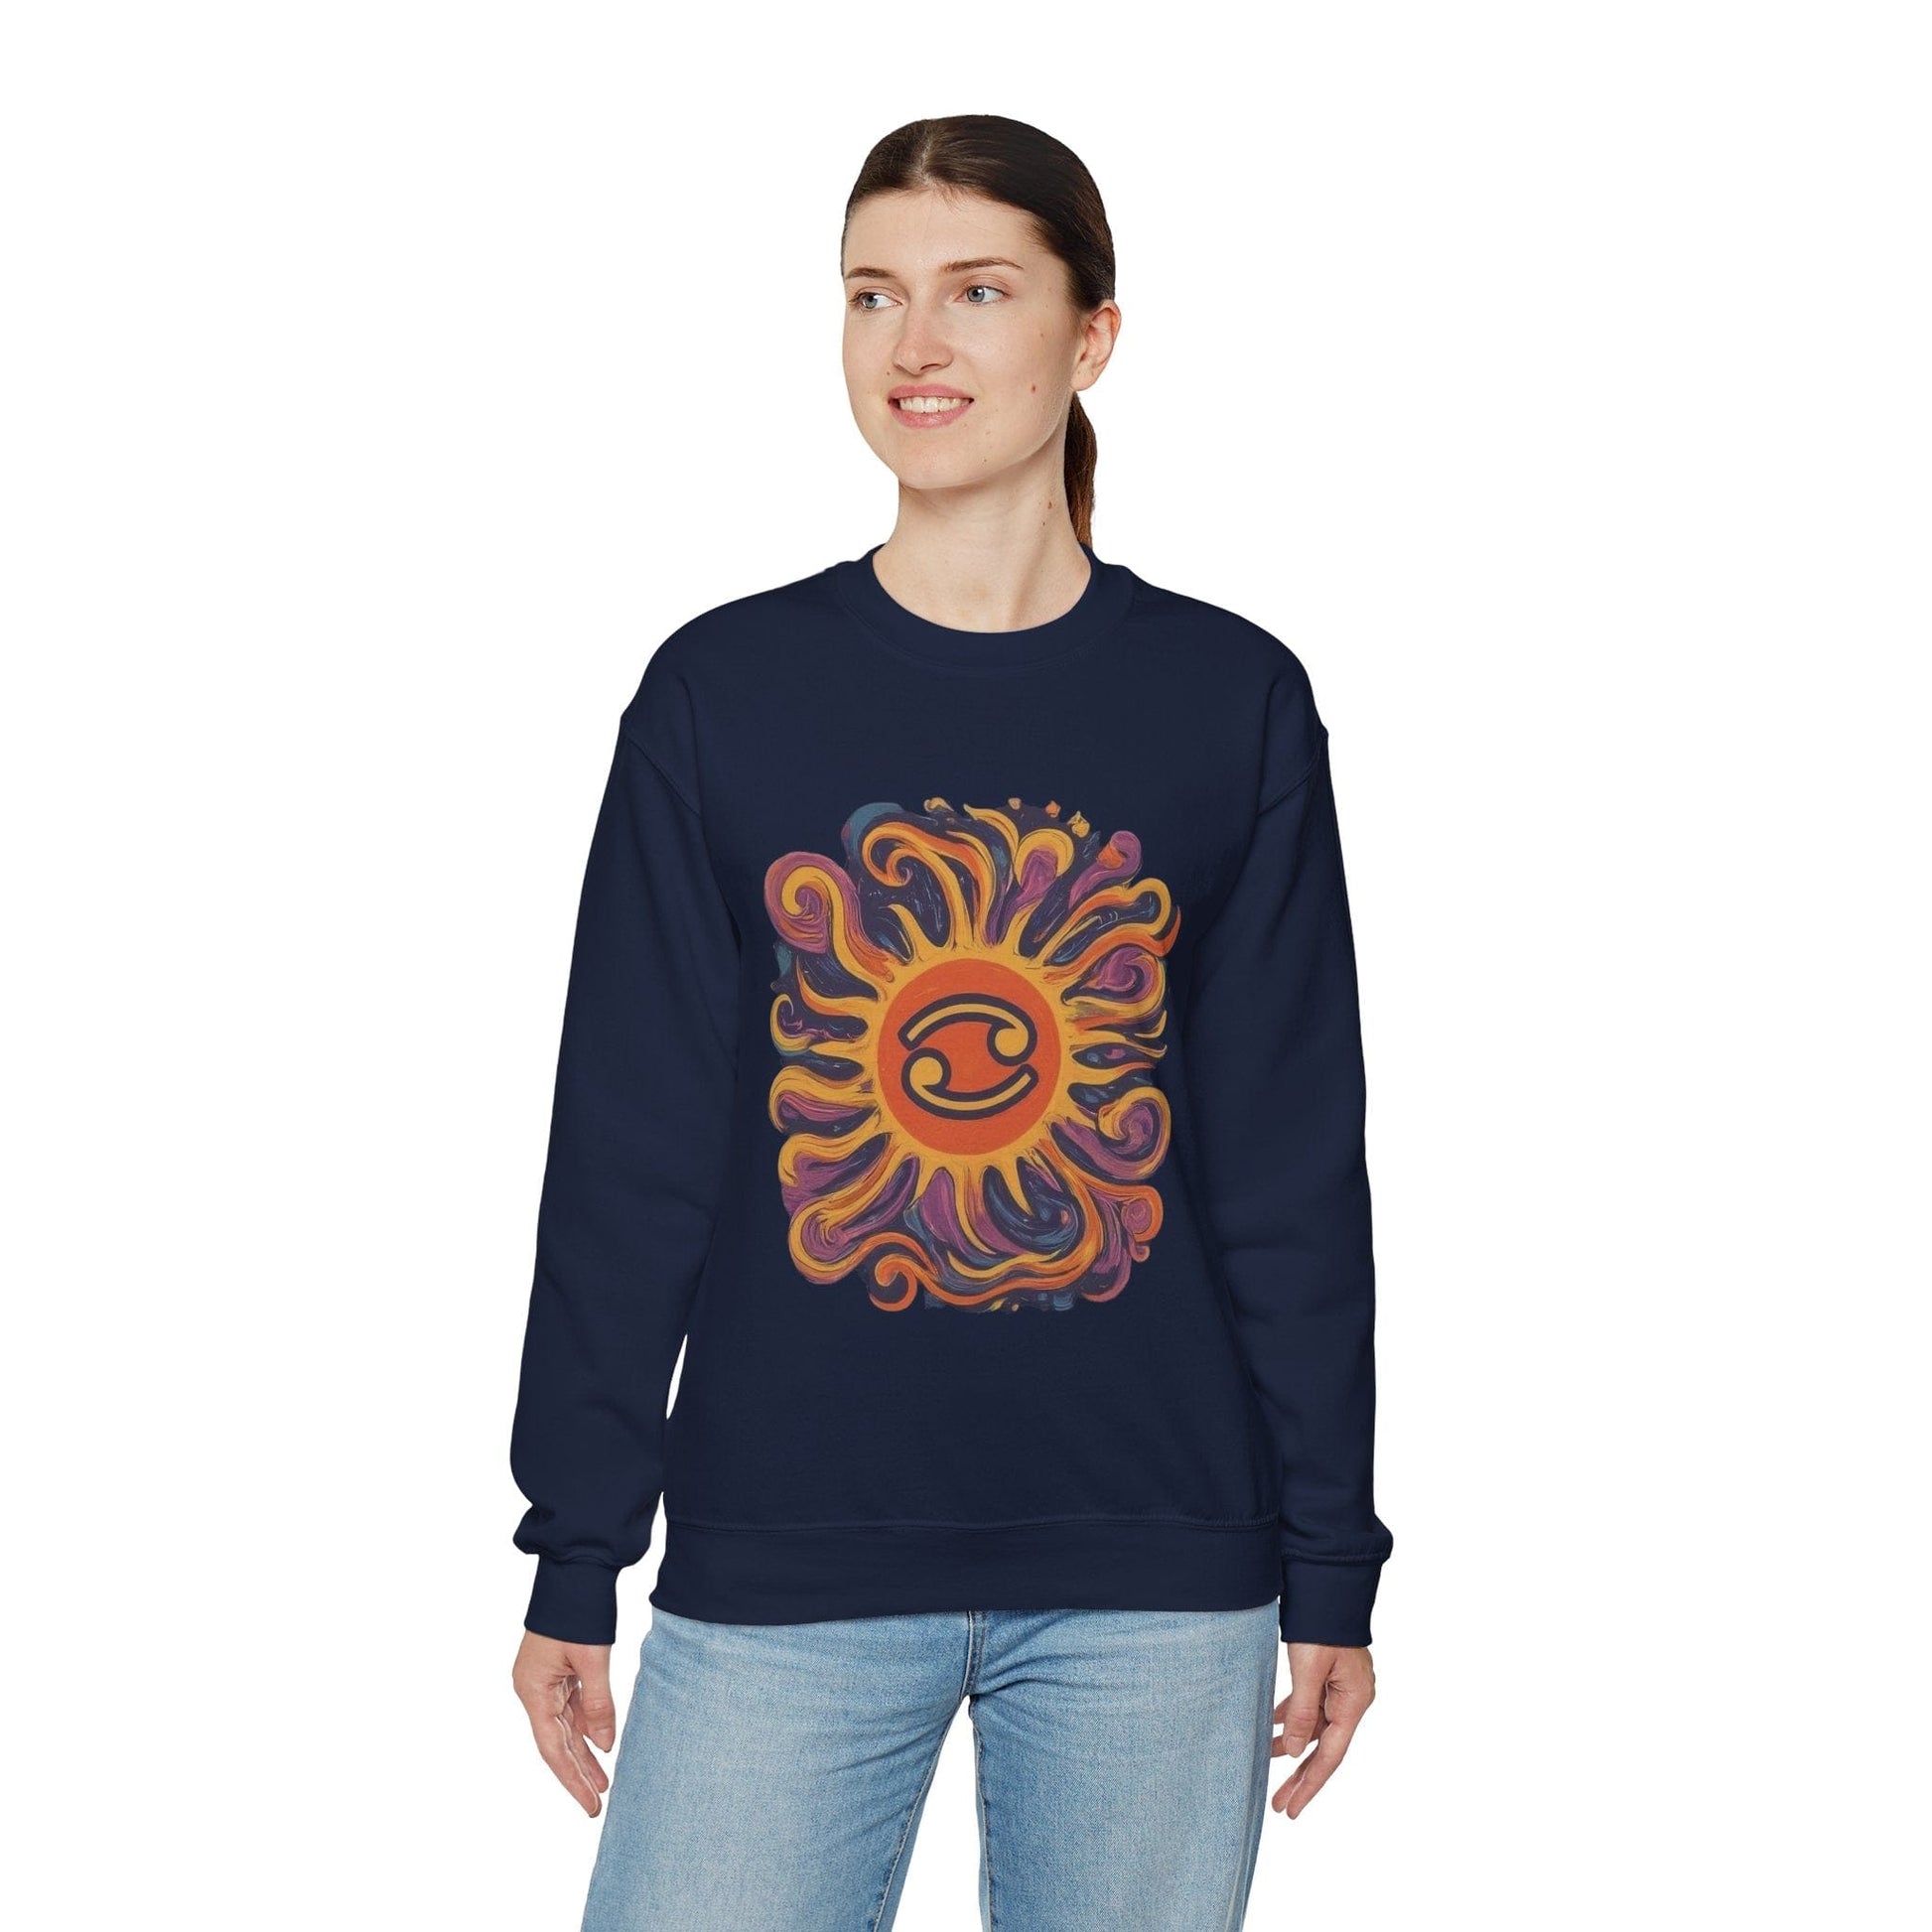 Sweatshirt Cosmic Cancer Sweater: Groovy 60s Vibes